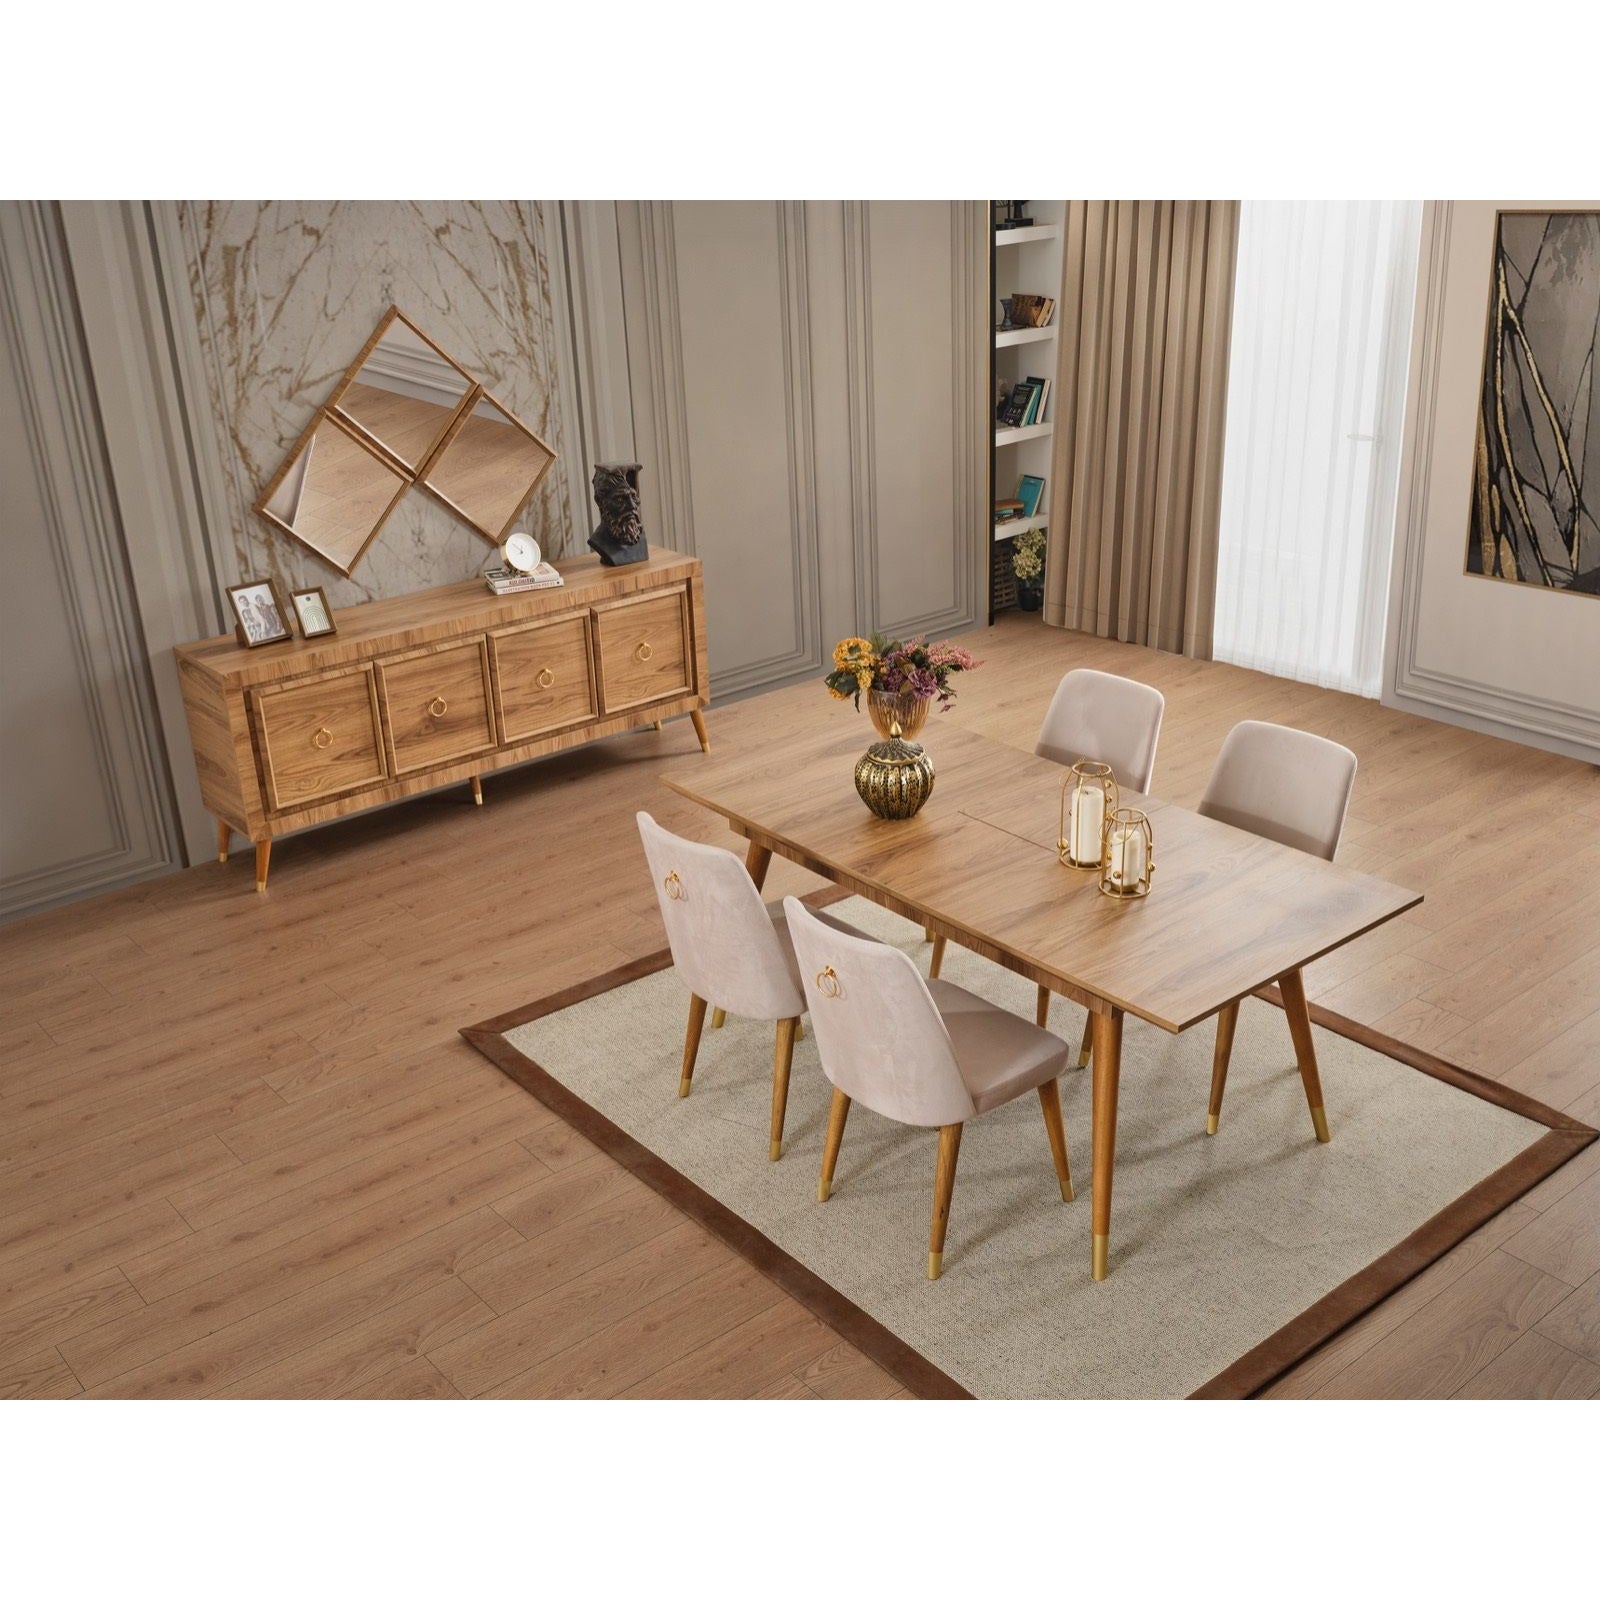 Pablo Skänk - LINE Furniture Group